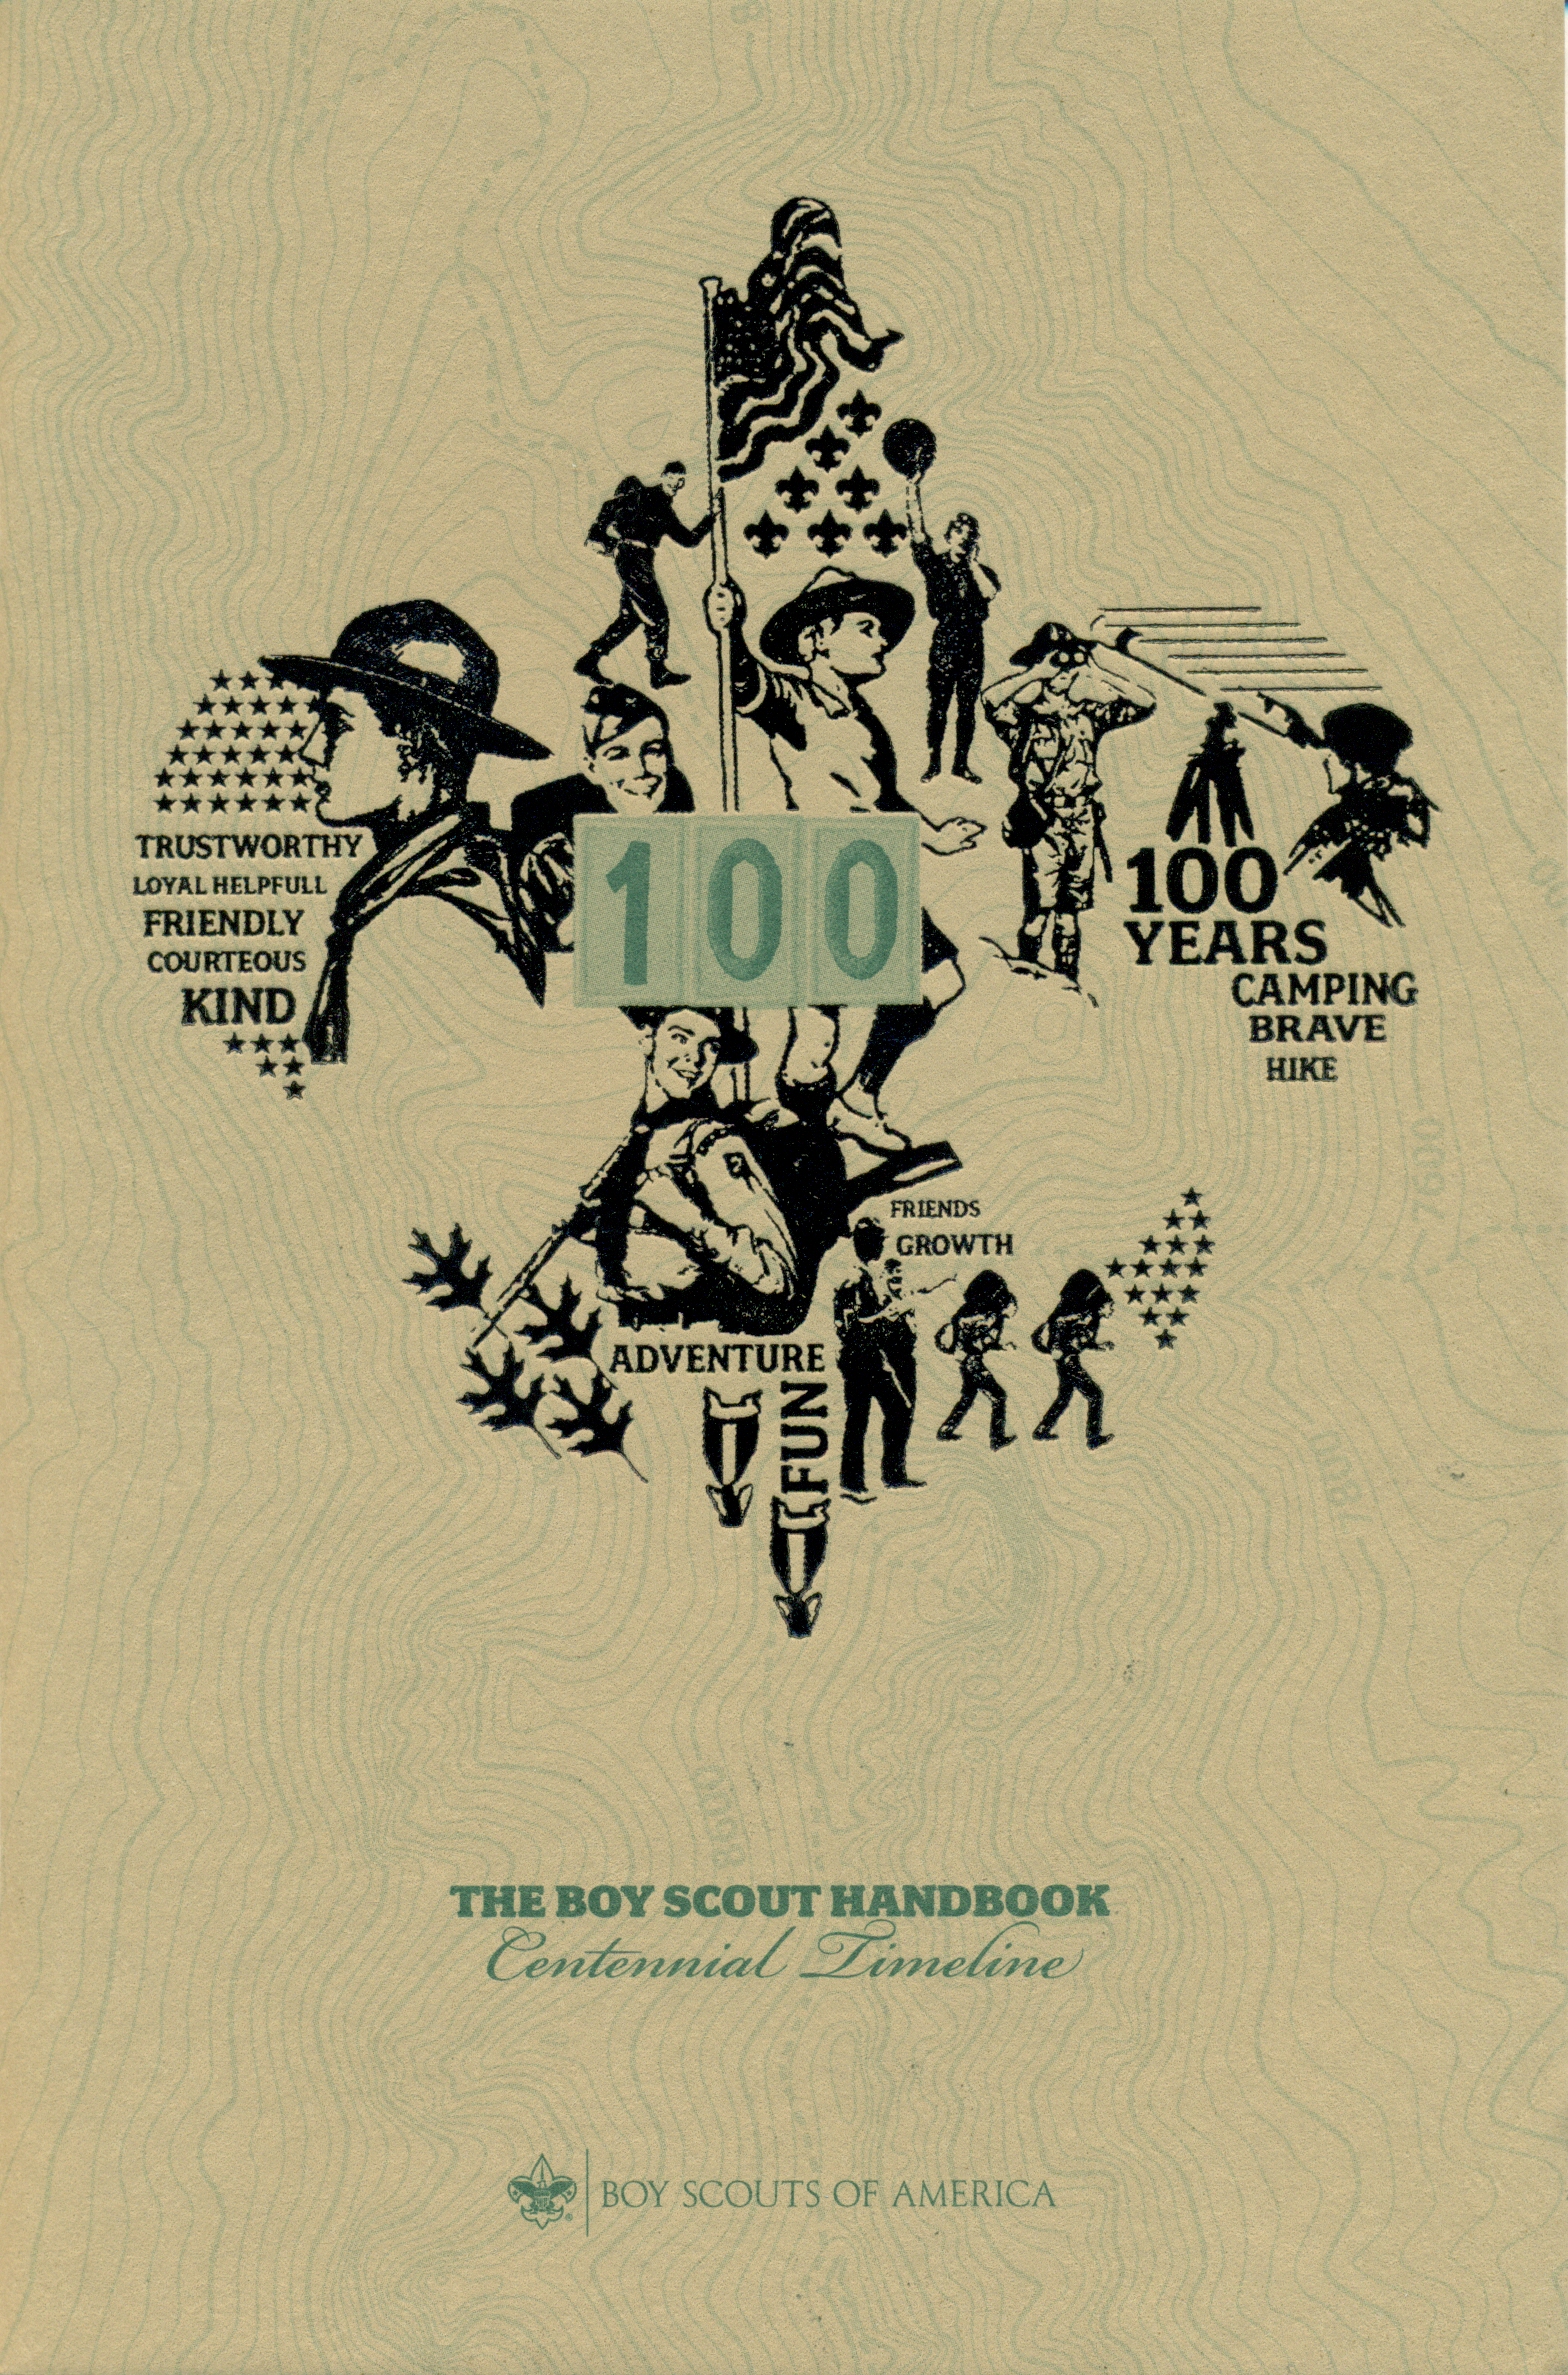 The Boy Scout Handbook Centennial Timeline image